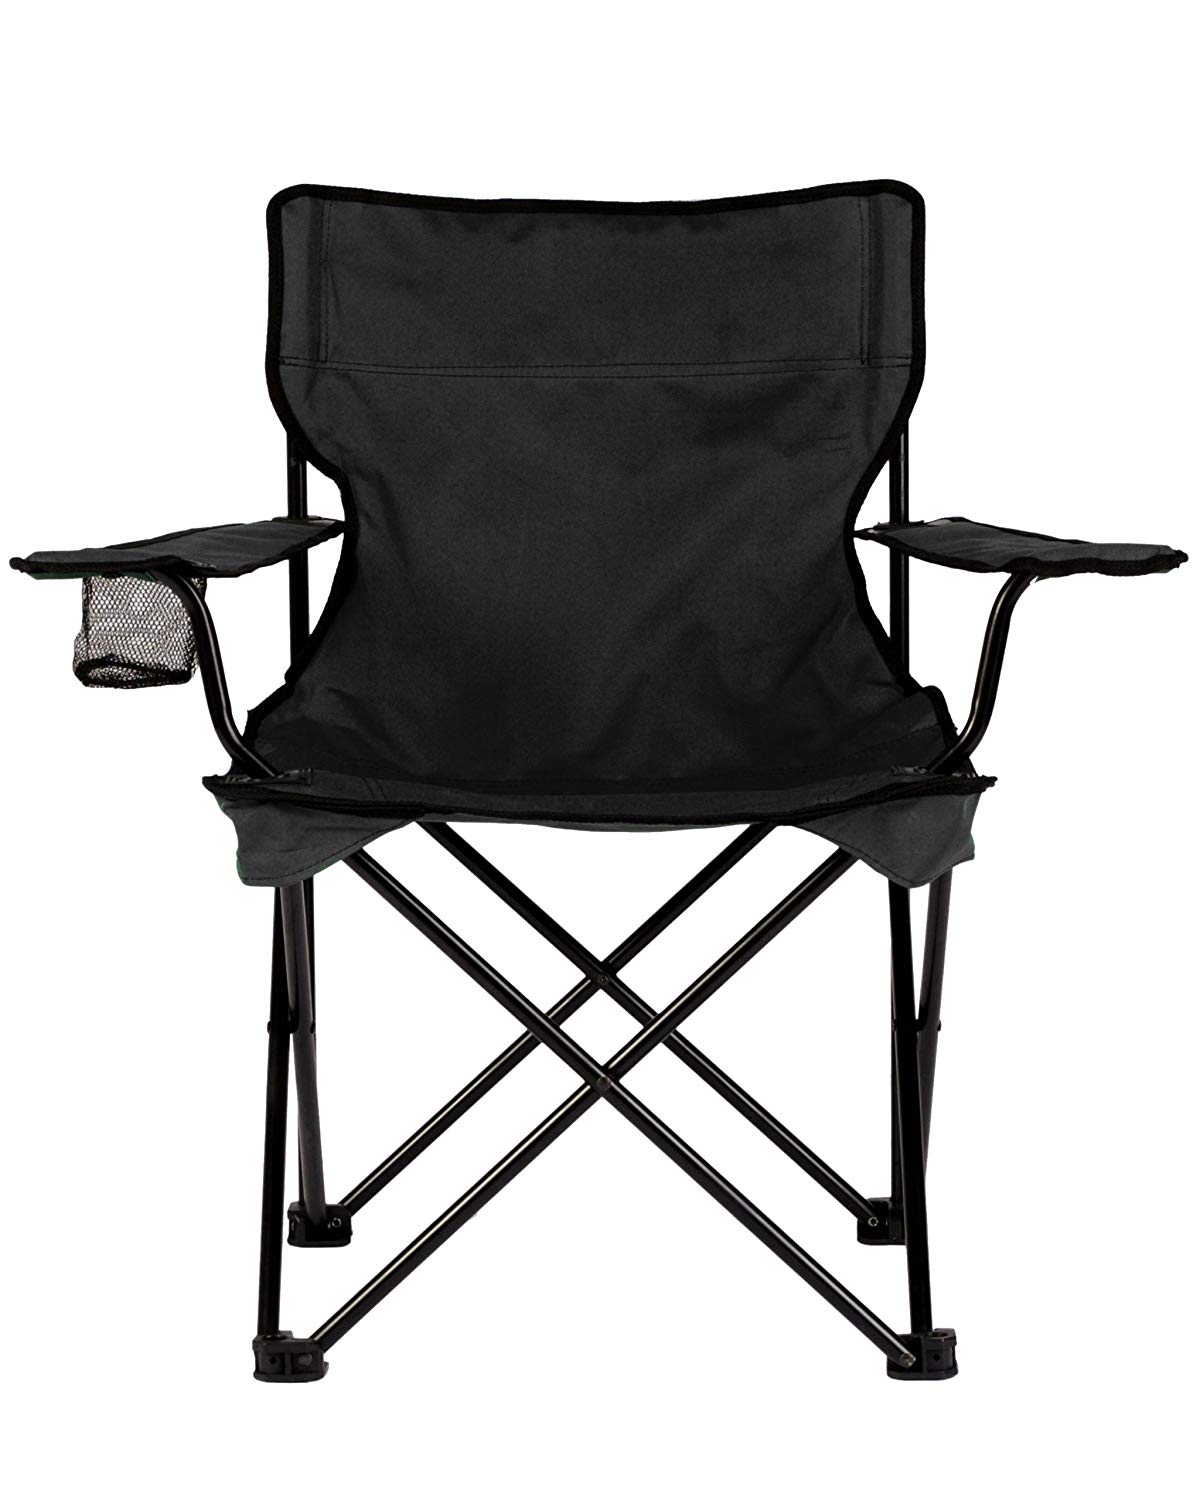 Camping chair amazon.com: travelchair c-series driver's chair, black: Camping chairs: QKEZIIQ